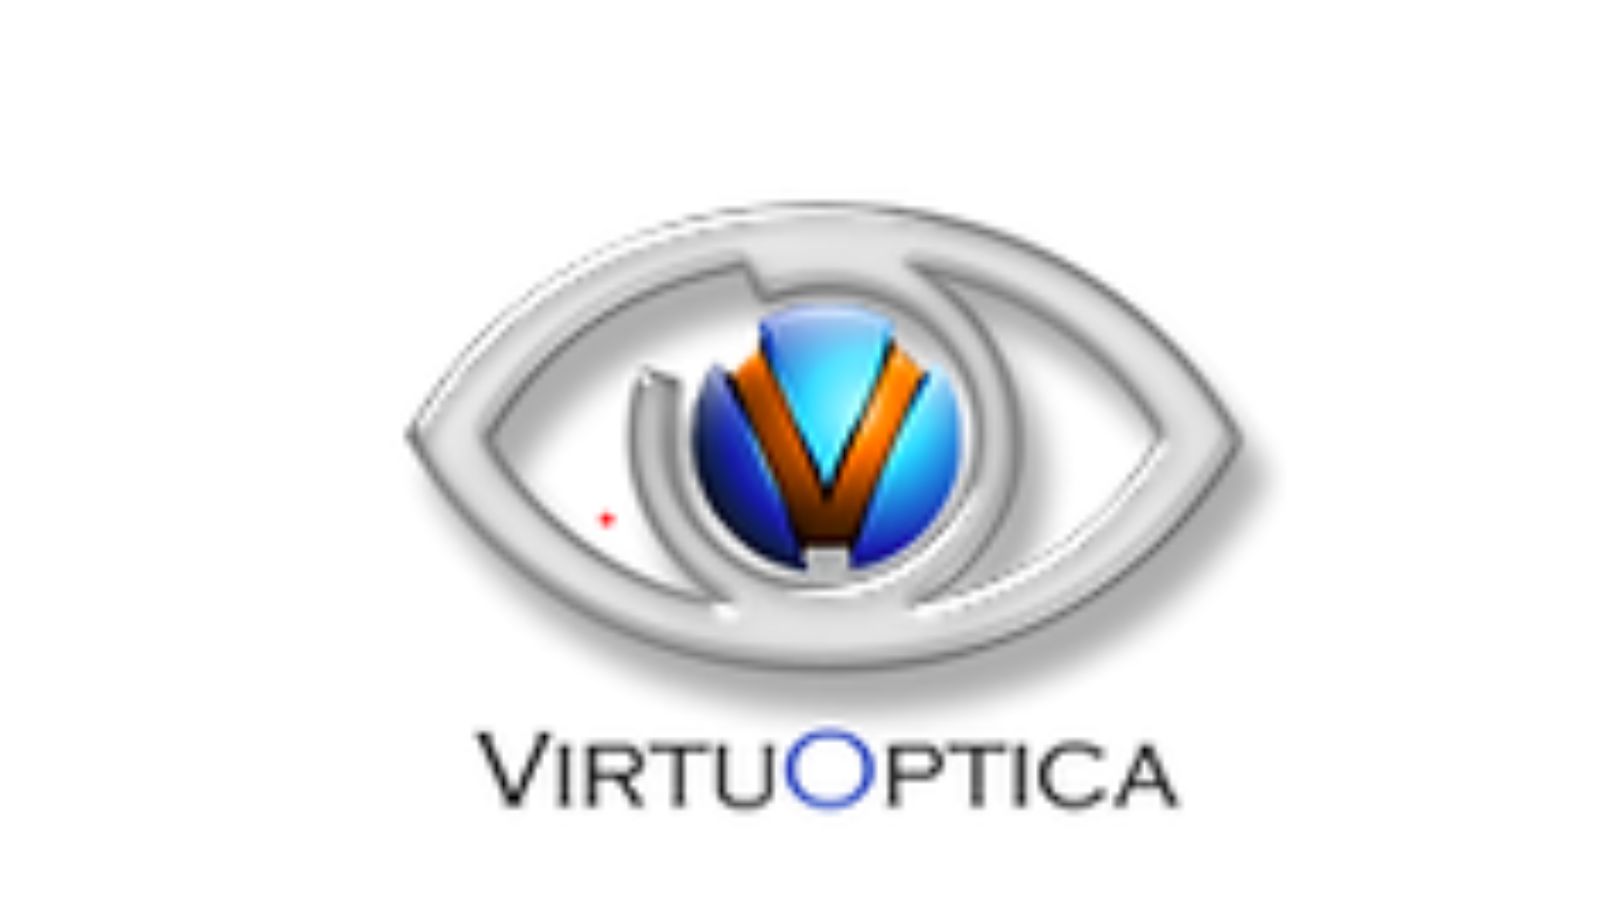 VirtuOptica —VR游戏自动验光配镜创新企业